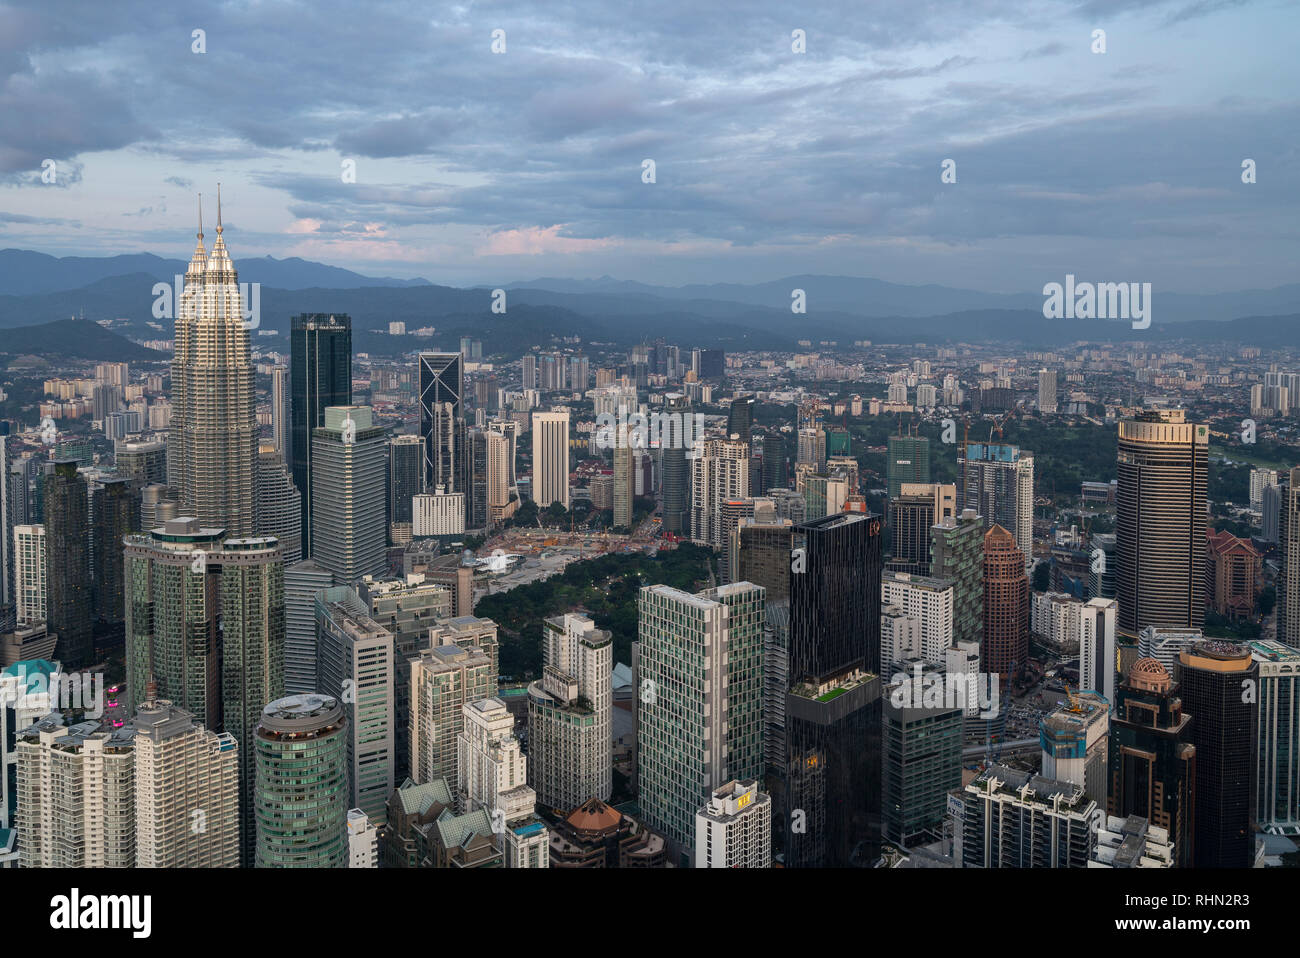 A view of Petronas twin towers from the Menara Tower in Kuala Lumpur, Malaysia Stock Photo